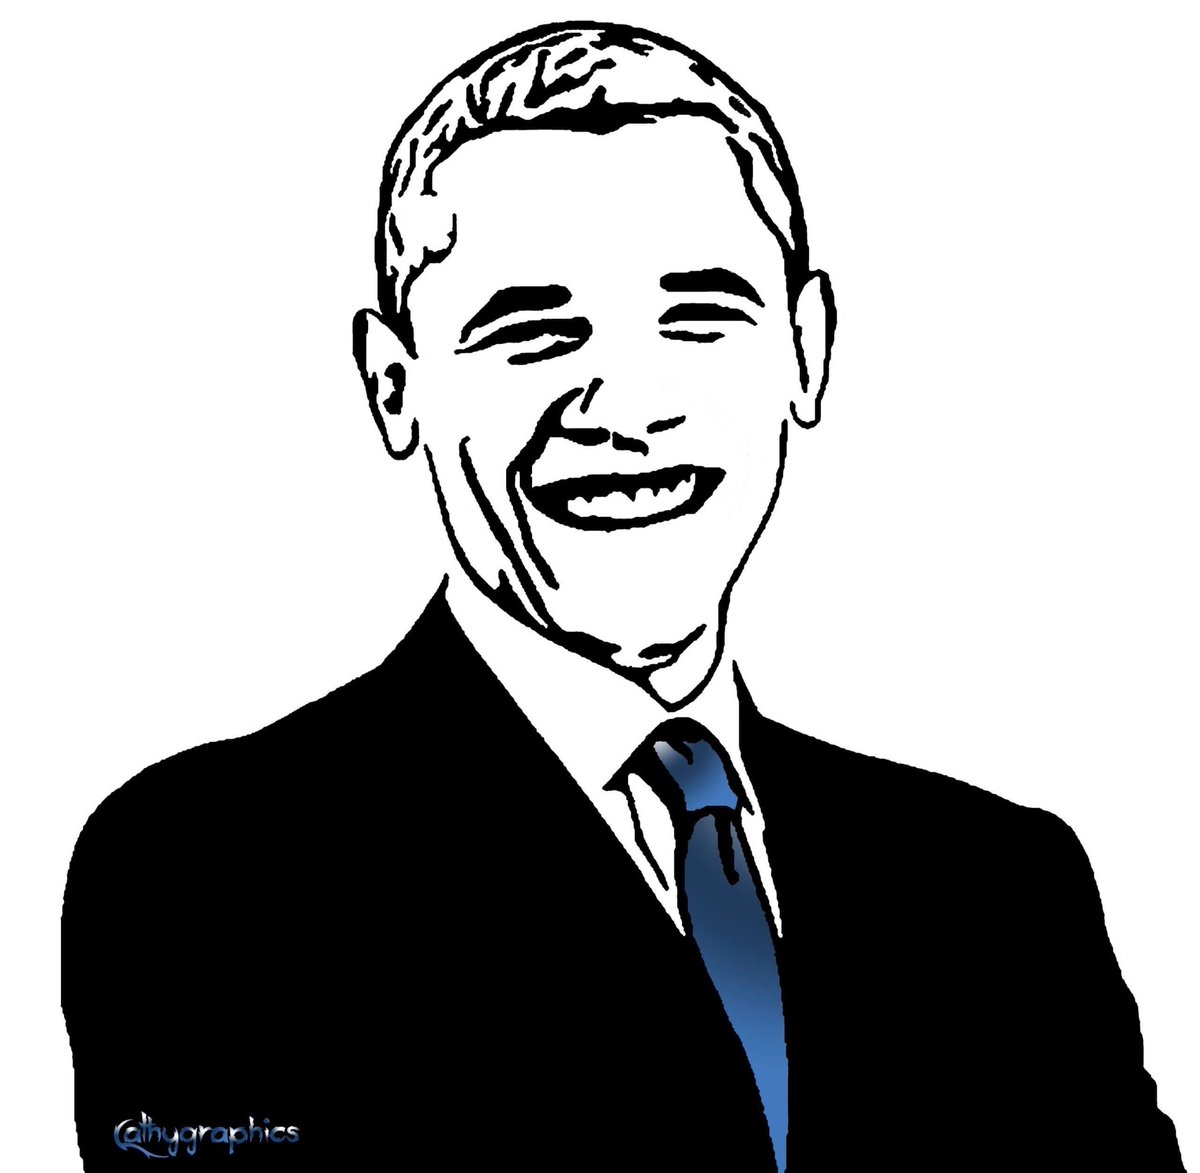 Let’s trigger some conservative by this portrait I drew of @BarackObama 💙😁 #ArtistOnTwitter ✍🏻